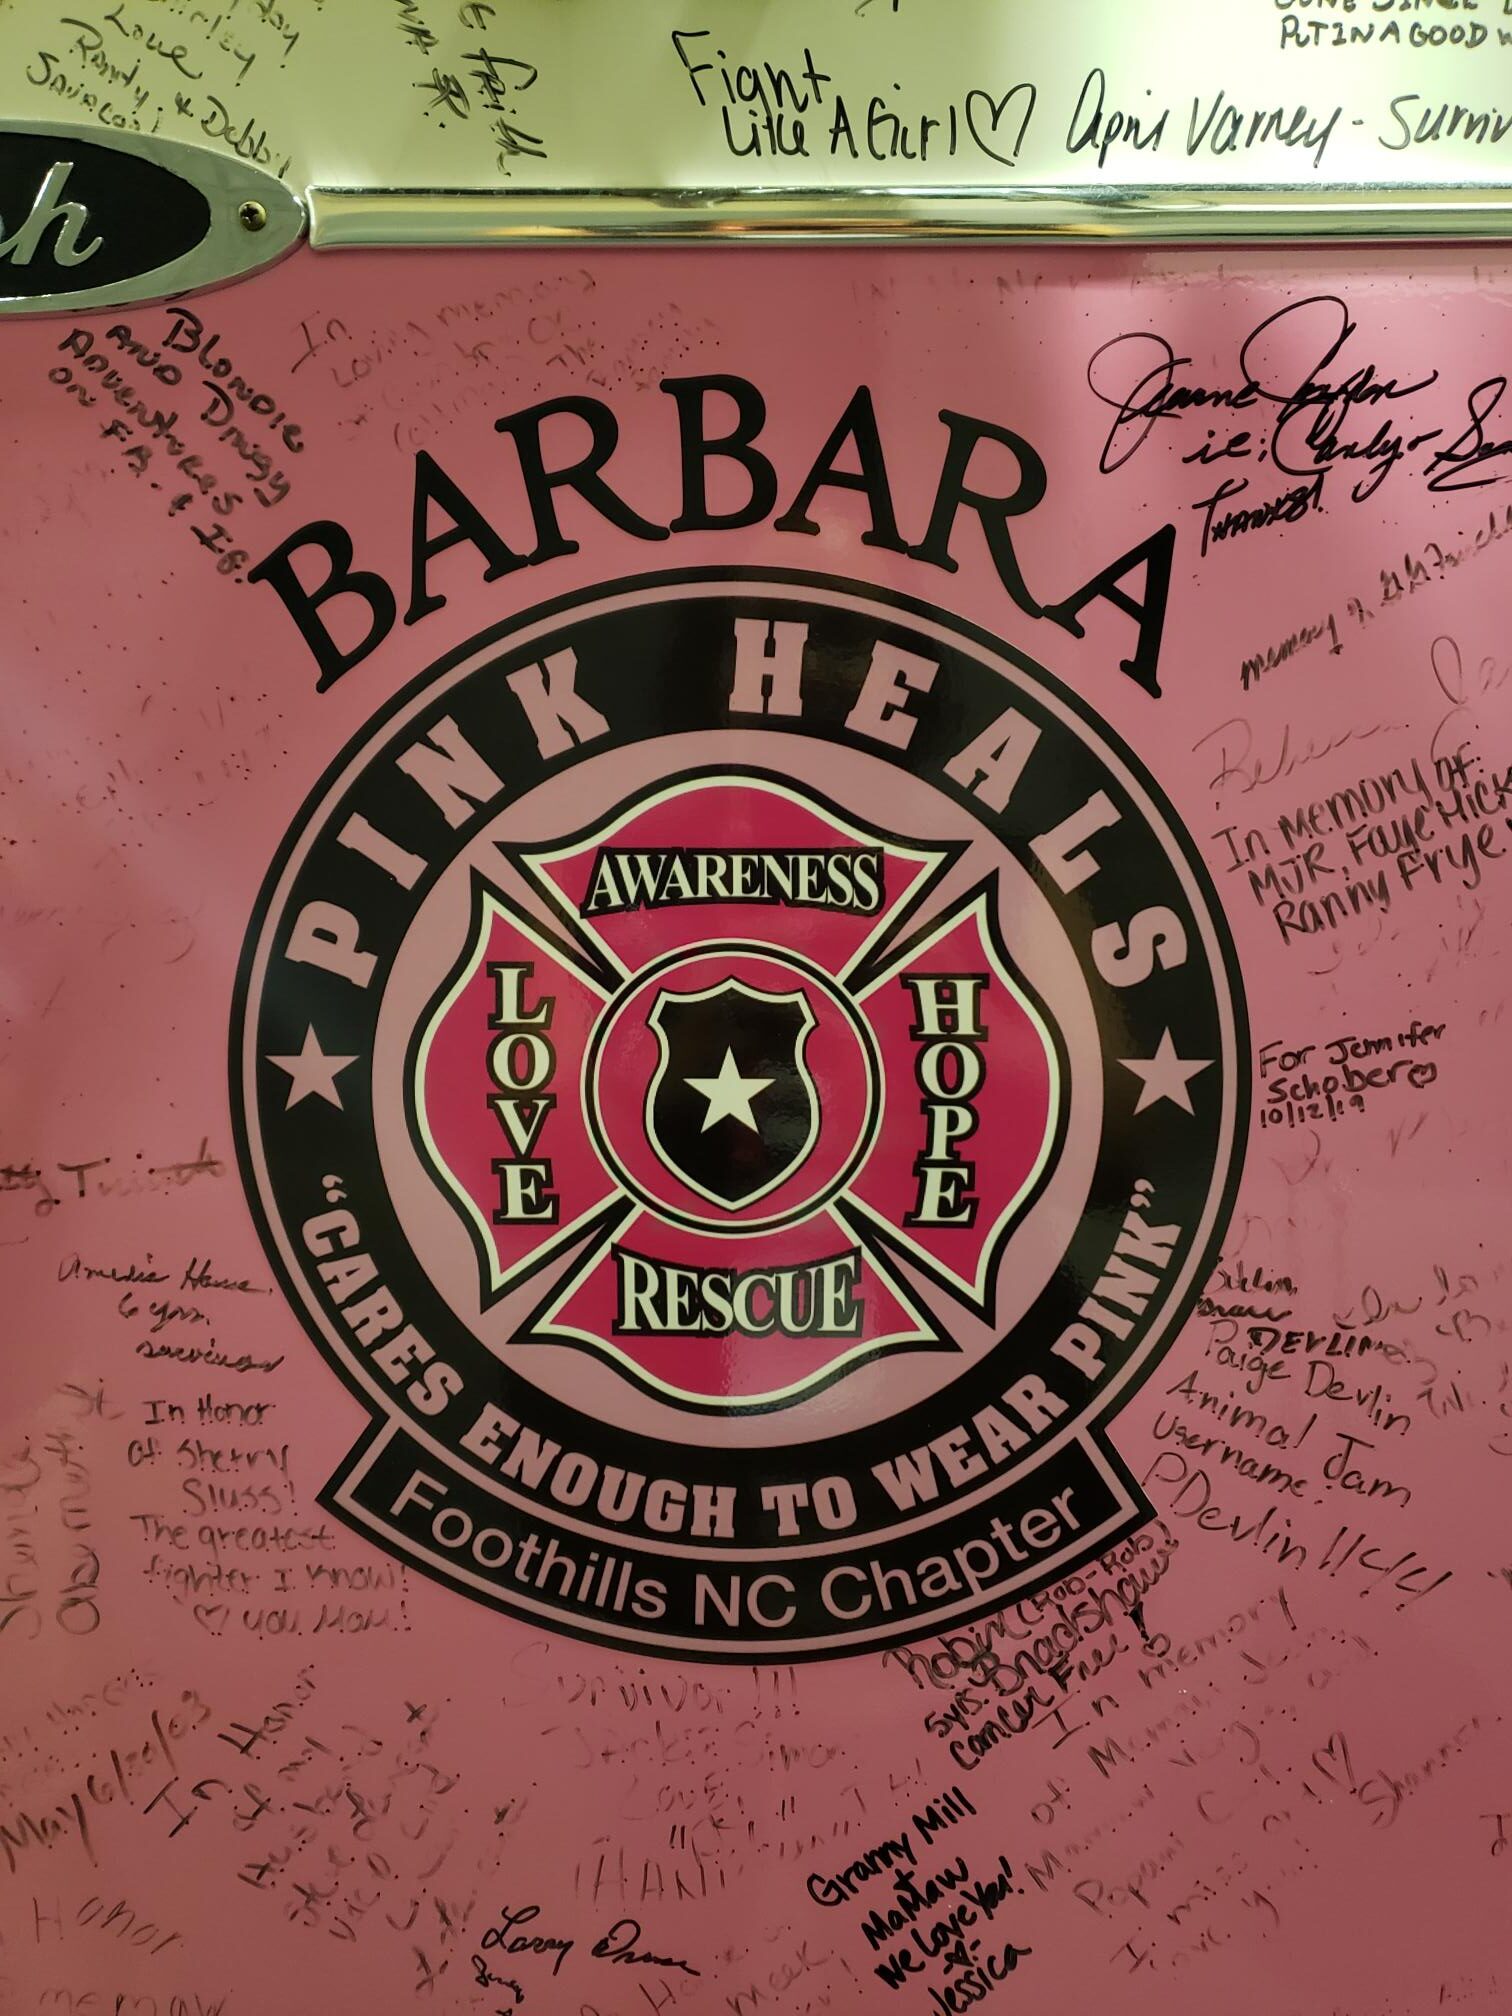 Pink heals Barbara